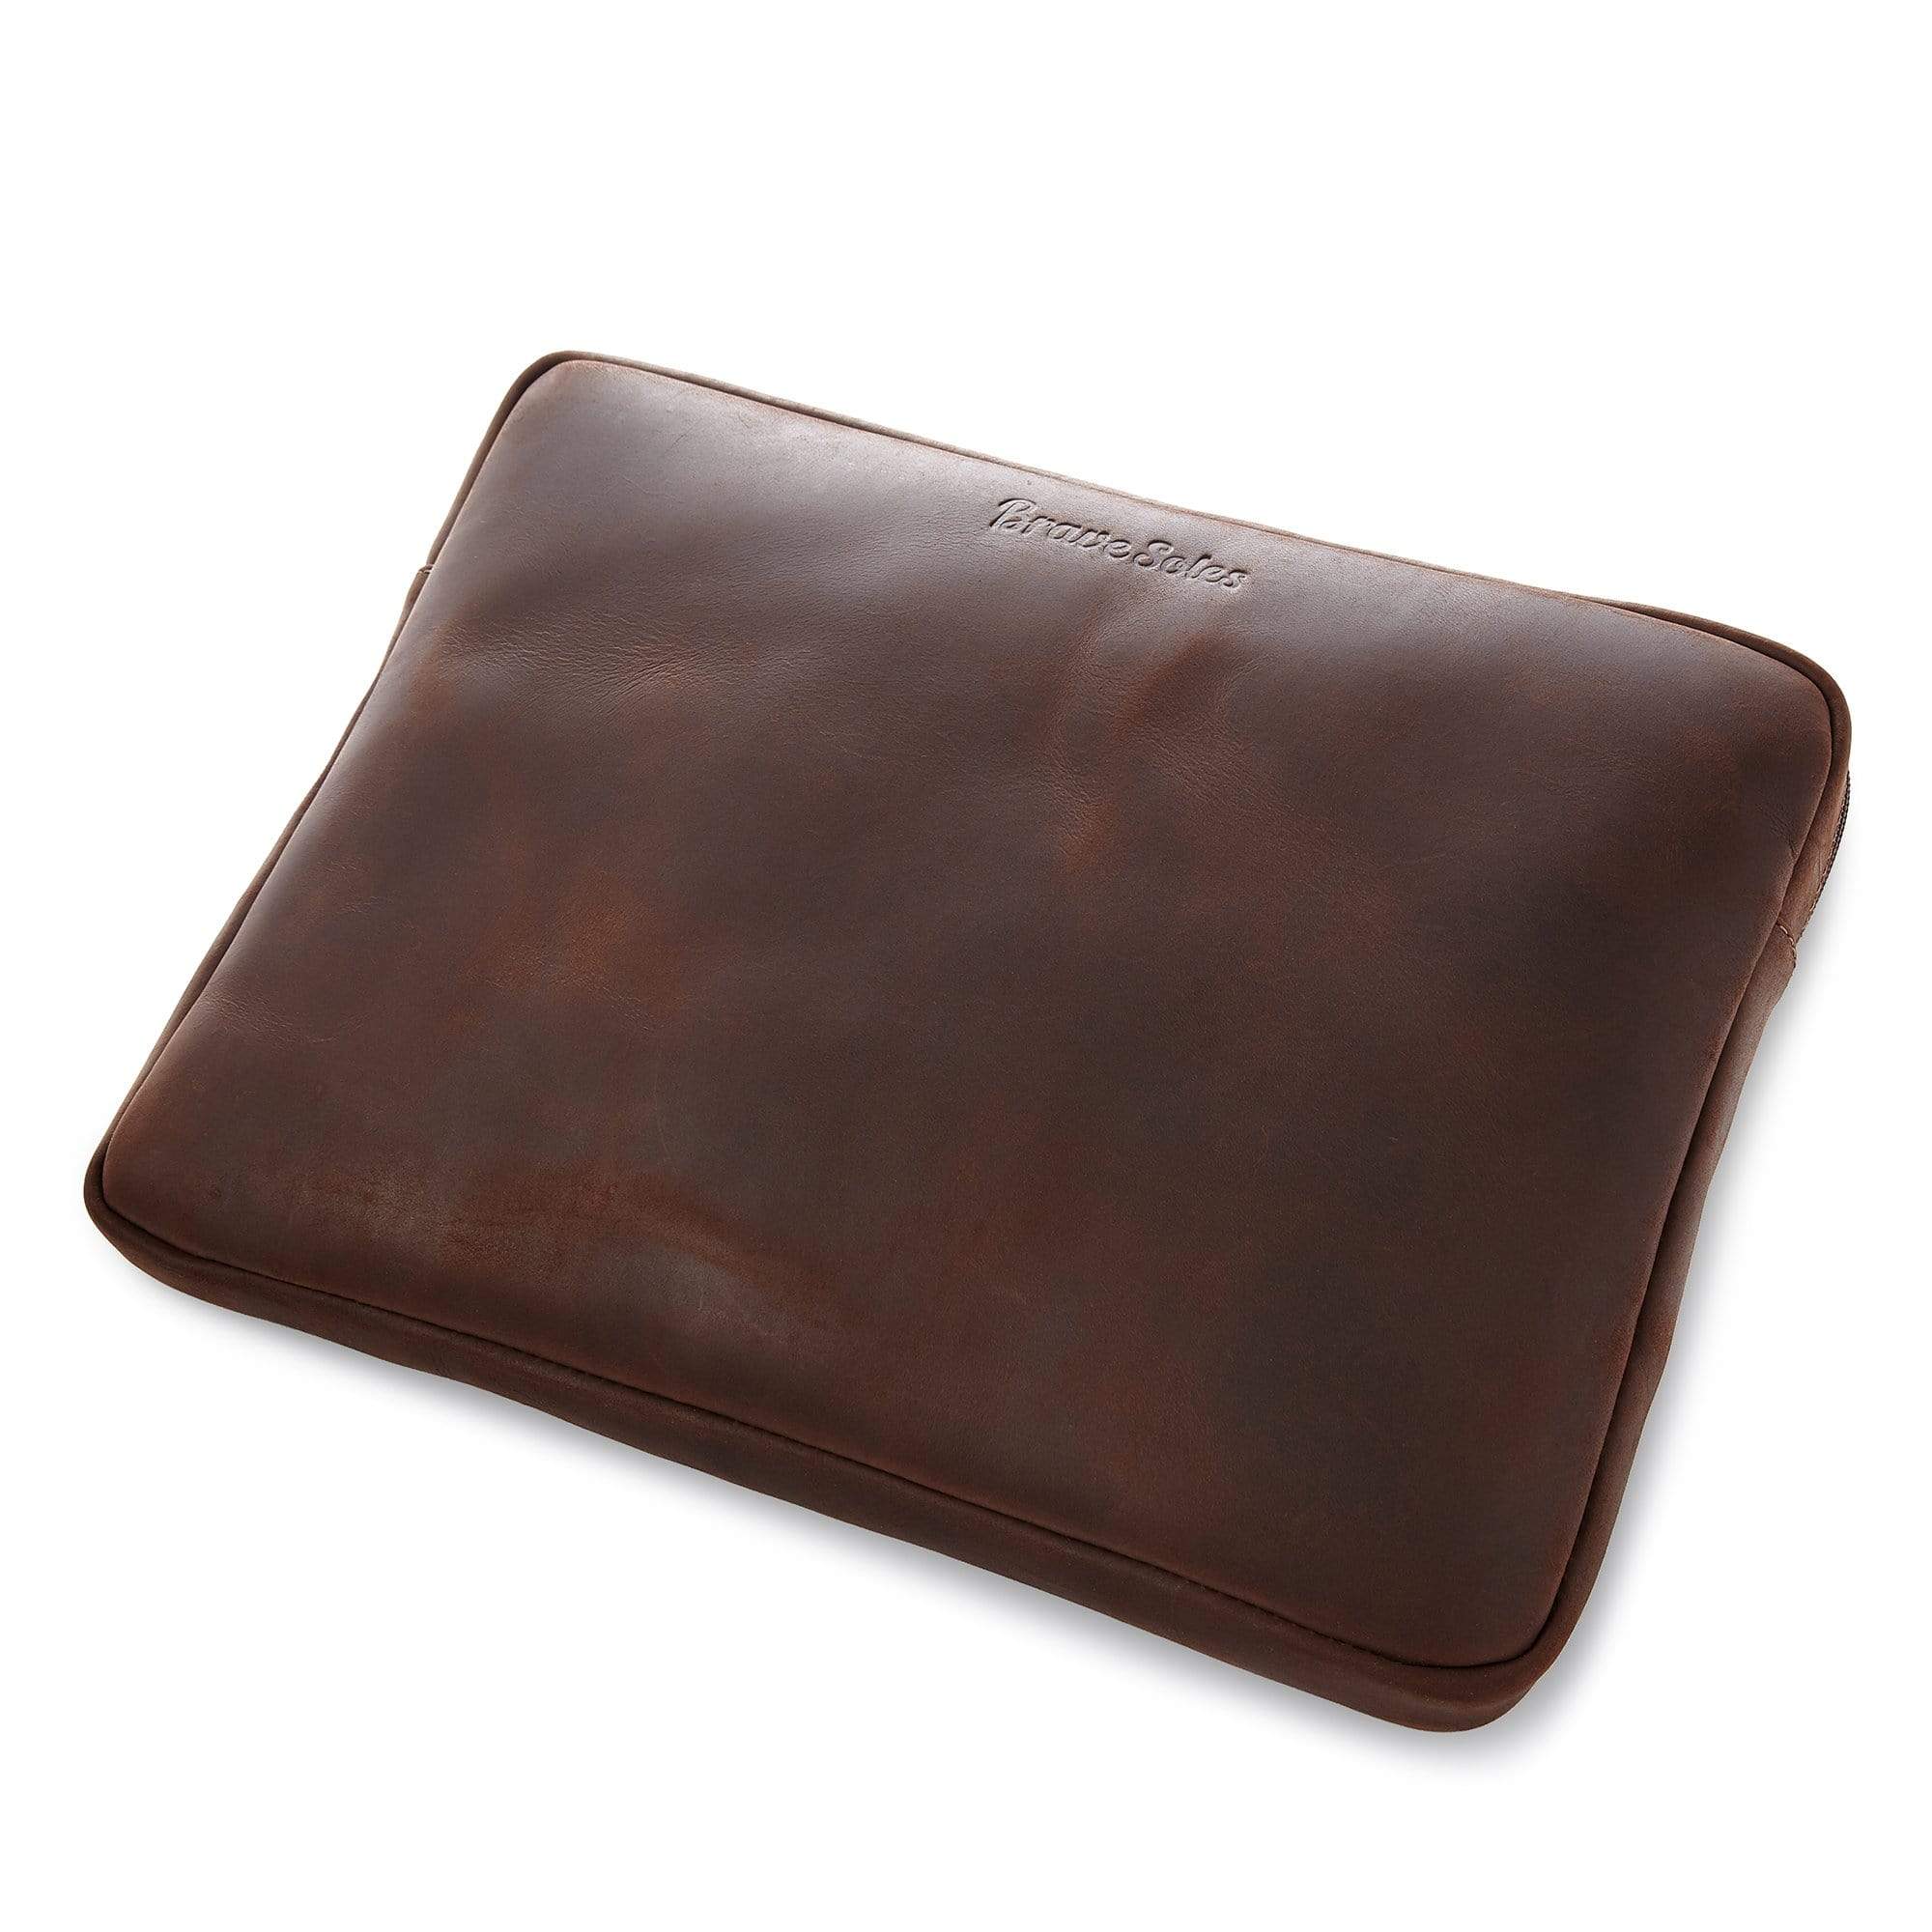 The Simpatico Leather Laptop Case